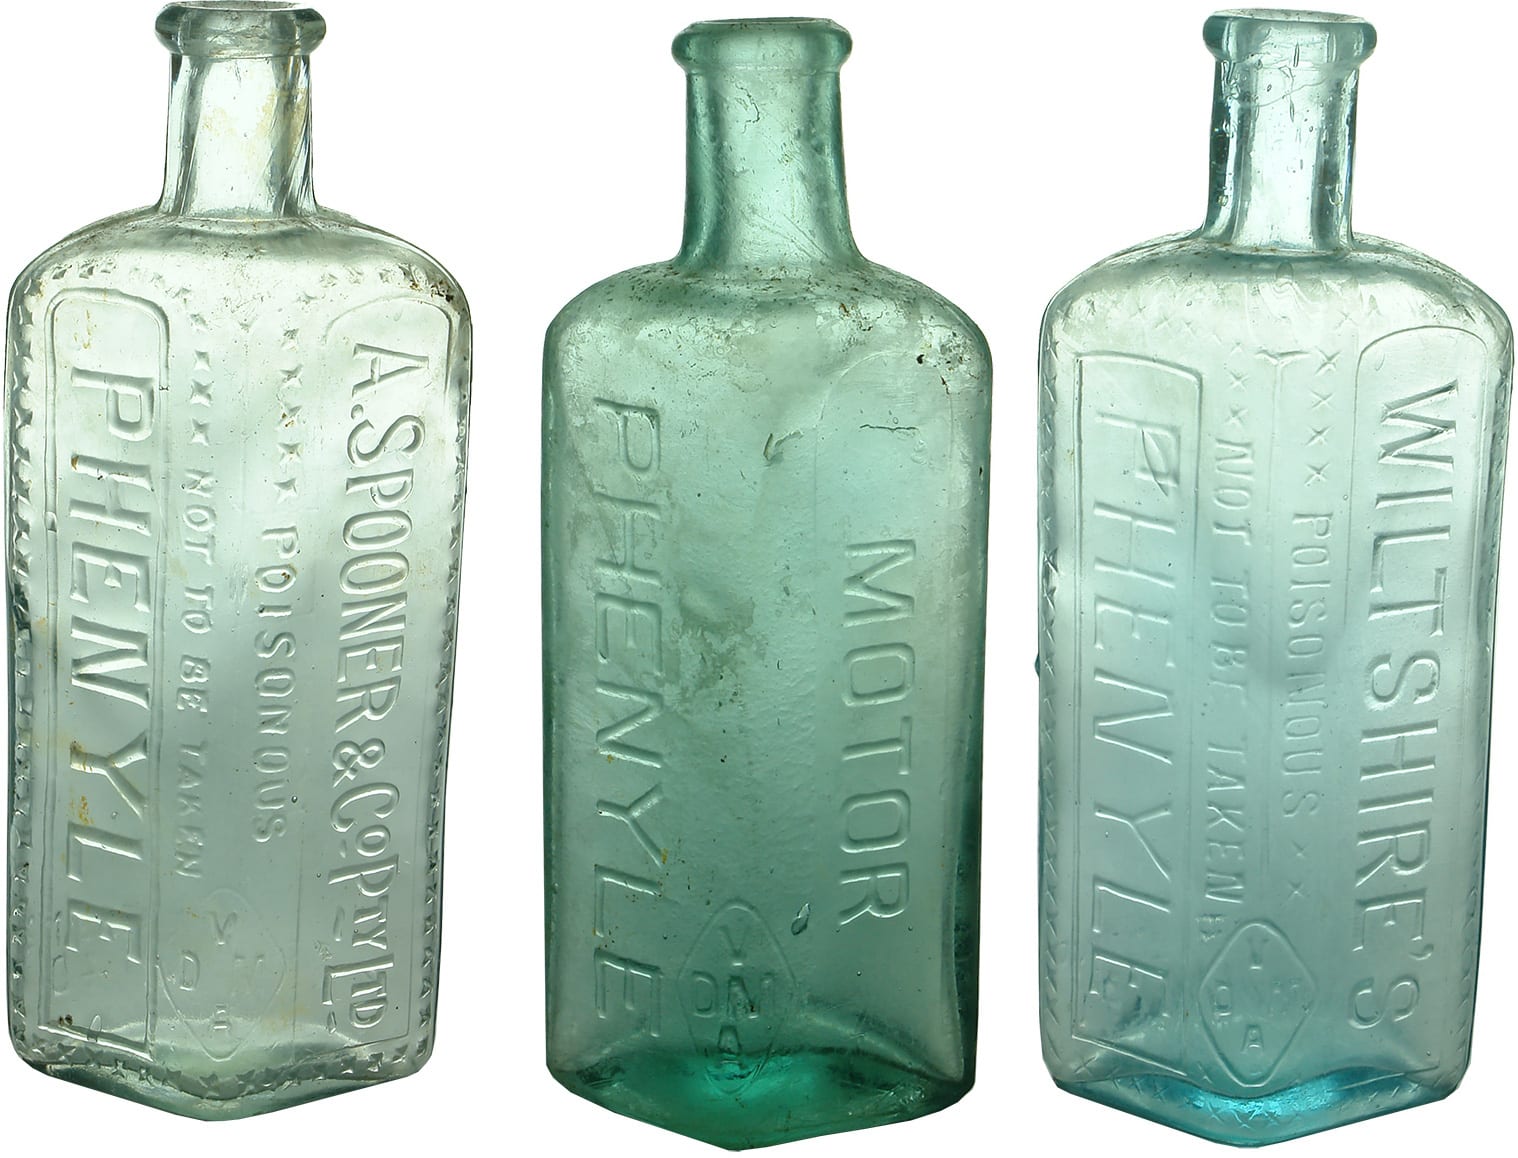 Antique Phenyle Poison Bottles